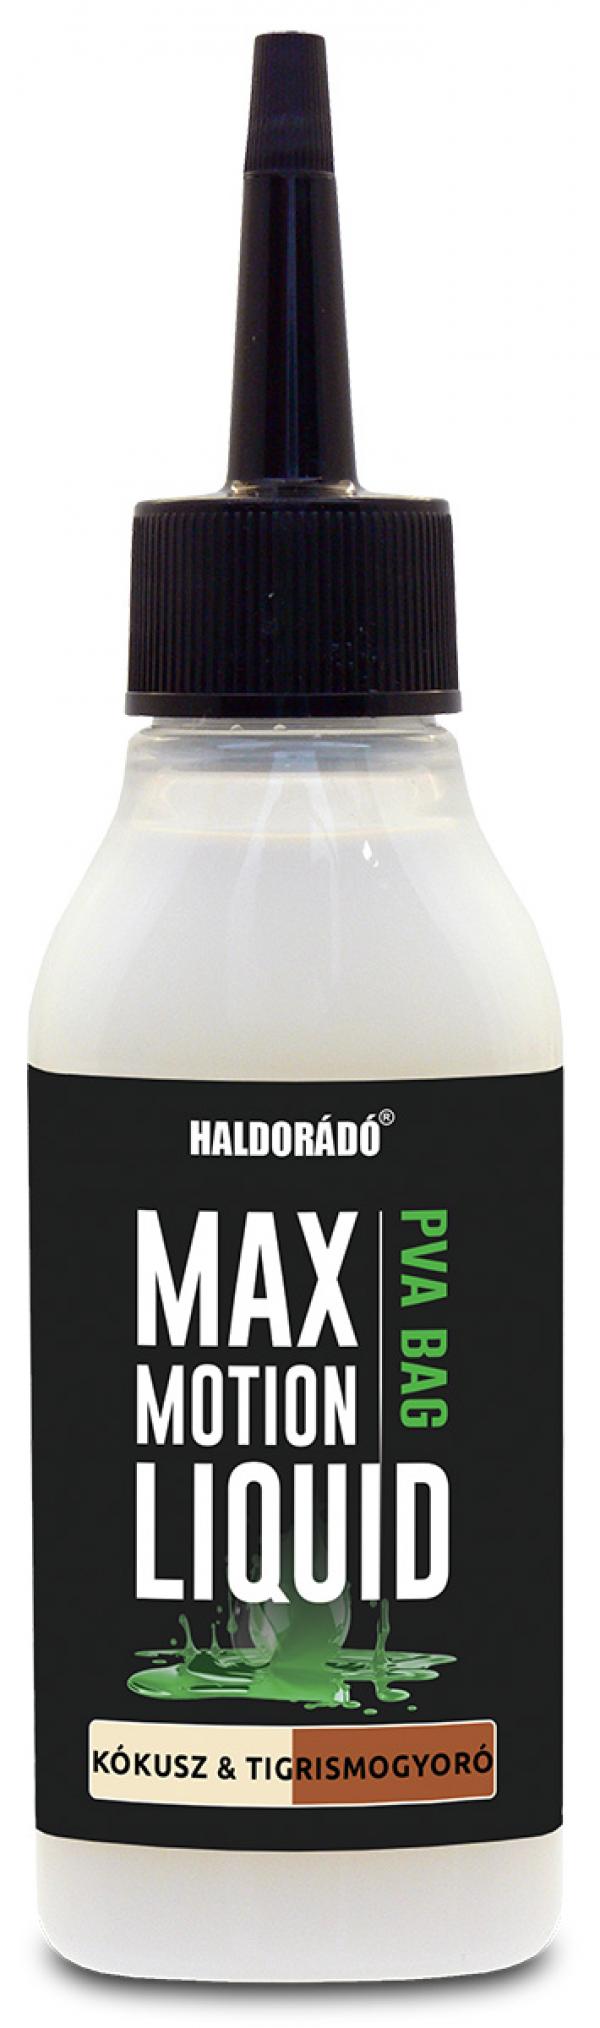 HALDORÁDÓ MAX MOTION PVA Bag Liquid - Kókusz & Tigrismogyo...